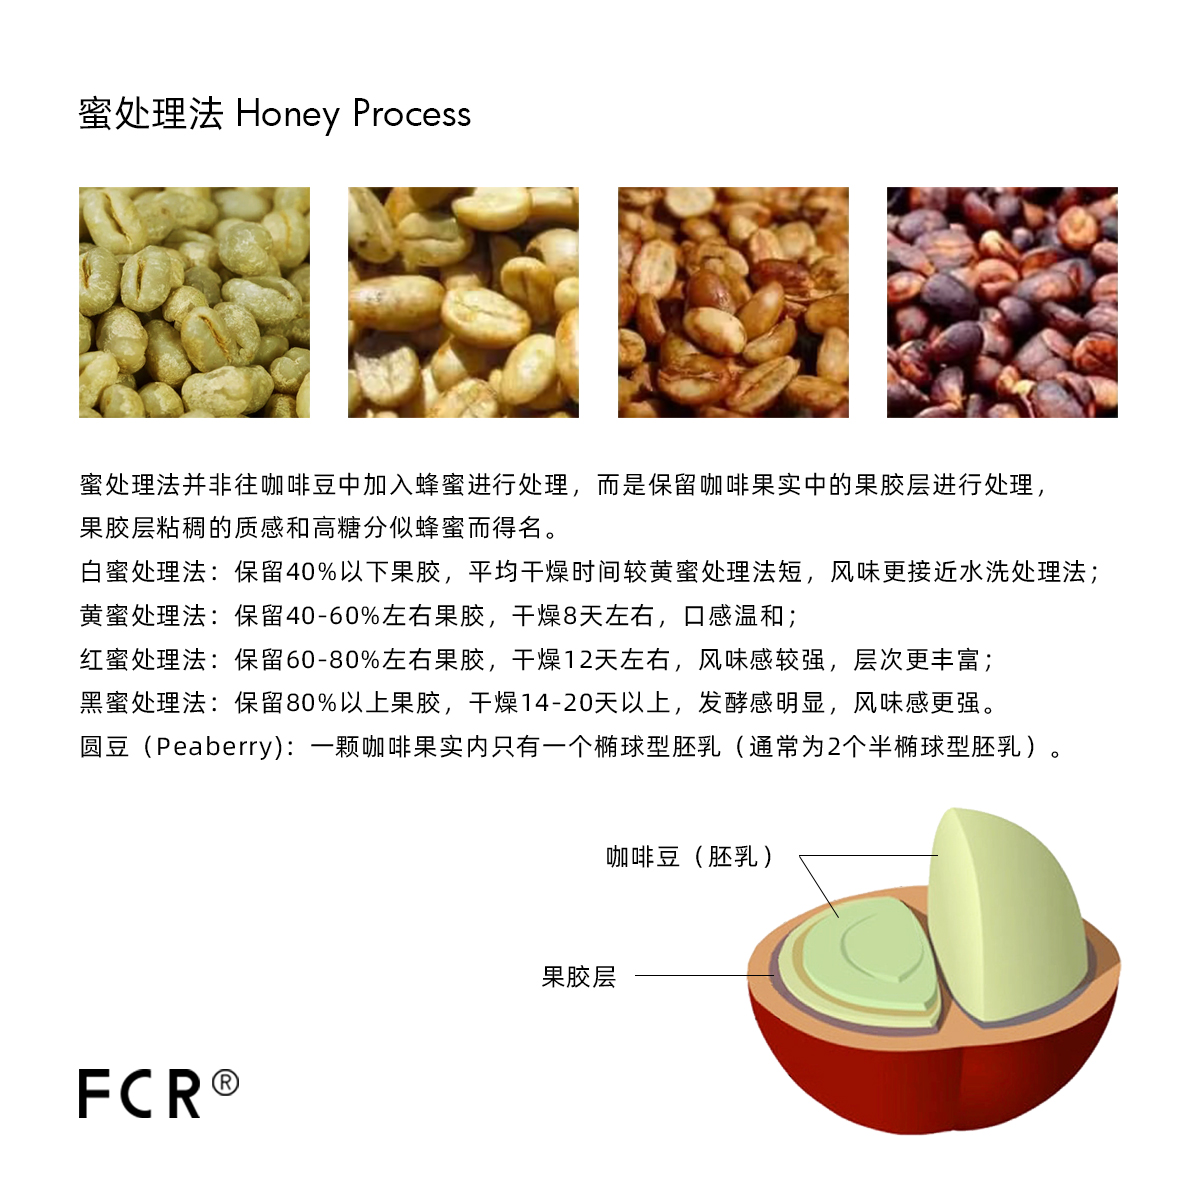 FCR云南蜜处理咖啡豆阿拉比卡手冲小粒圆豆纯黑可现磨粉100克 - 图2